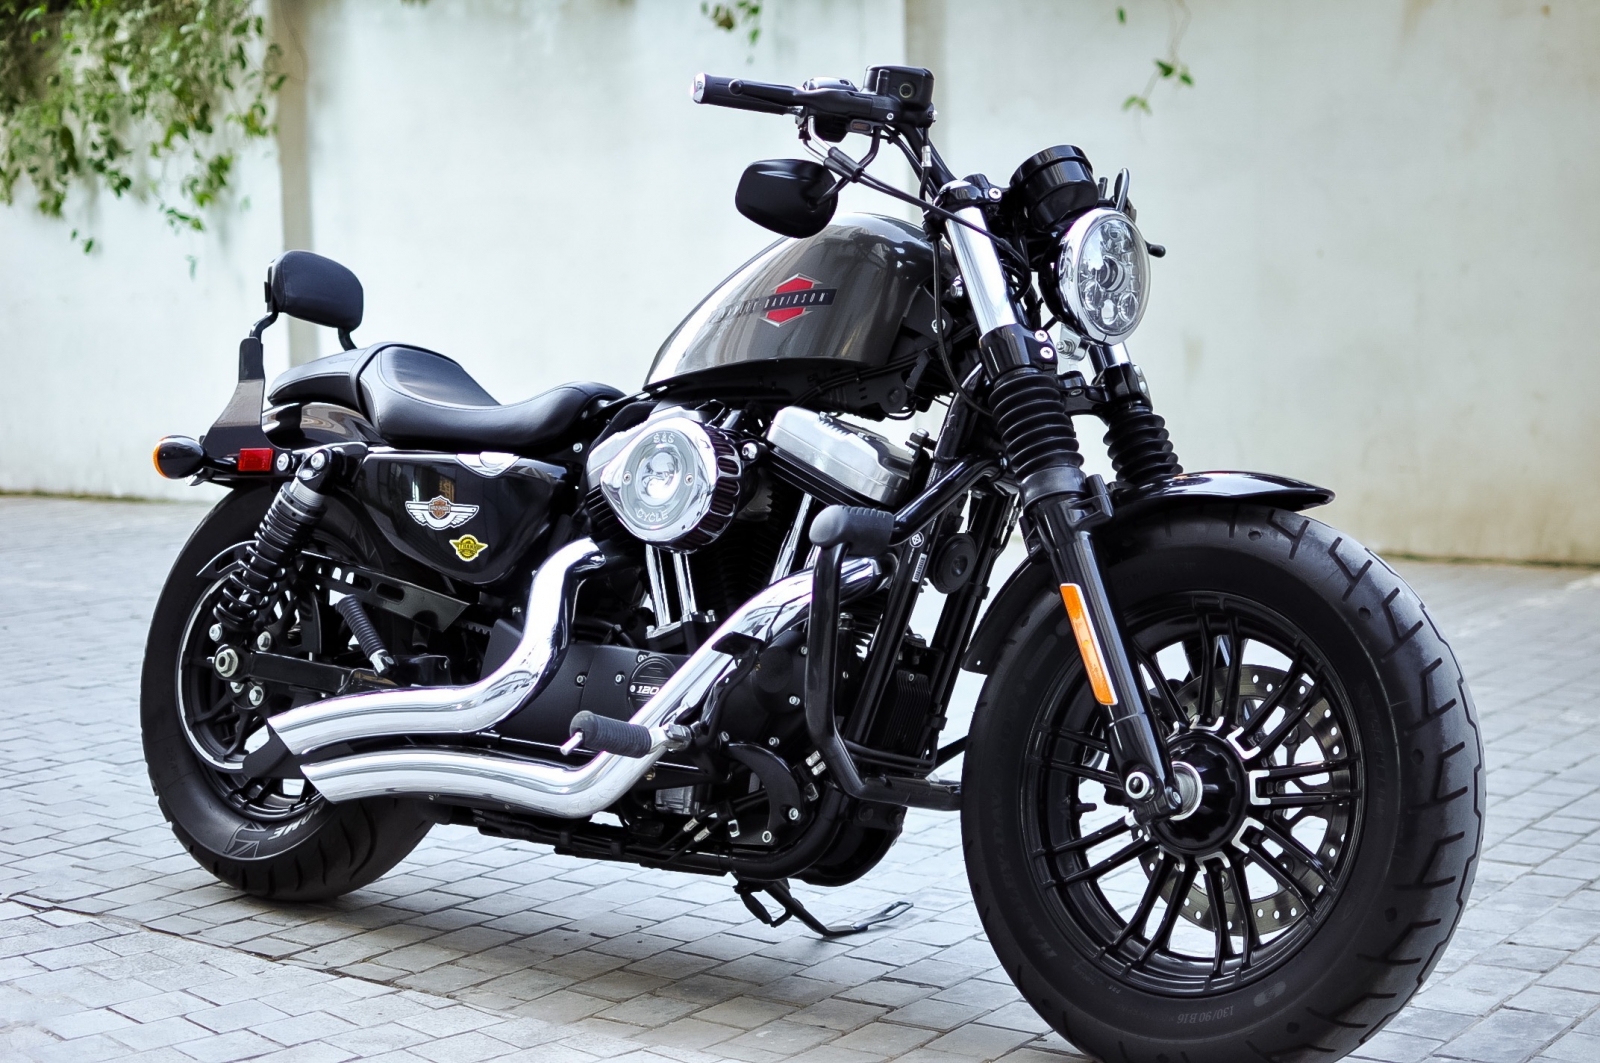 Harley Davidson Forty Eight 2020 Siêu lướt